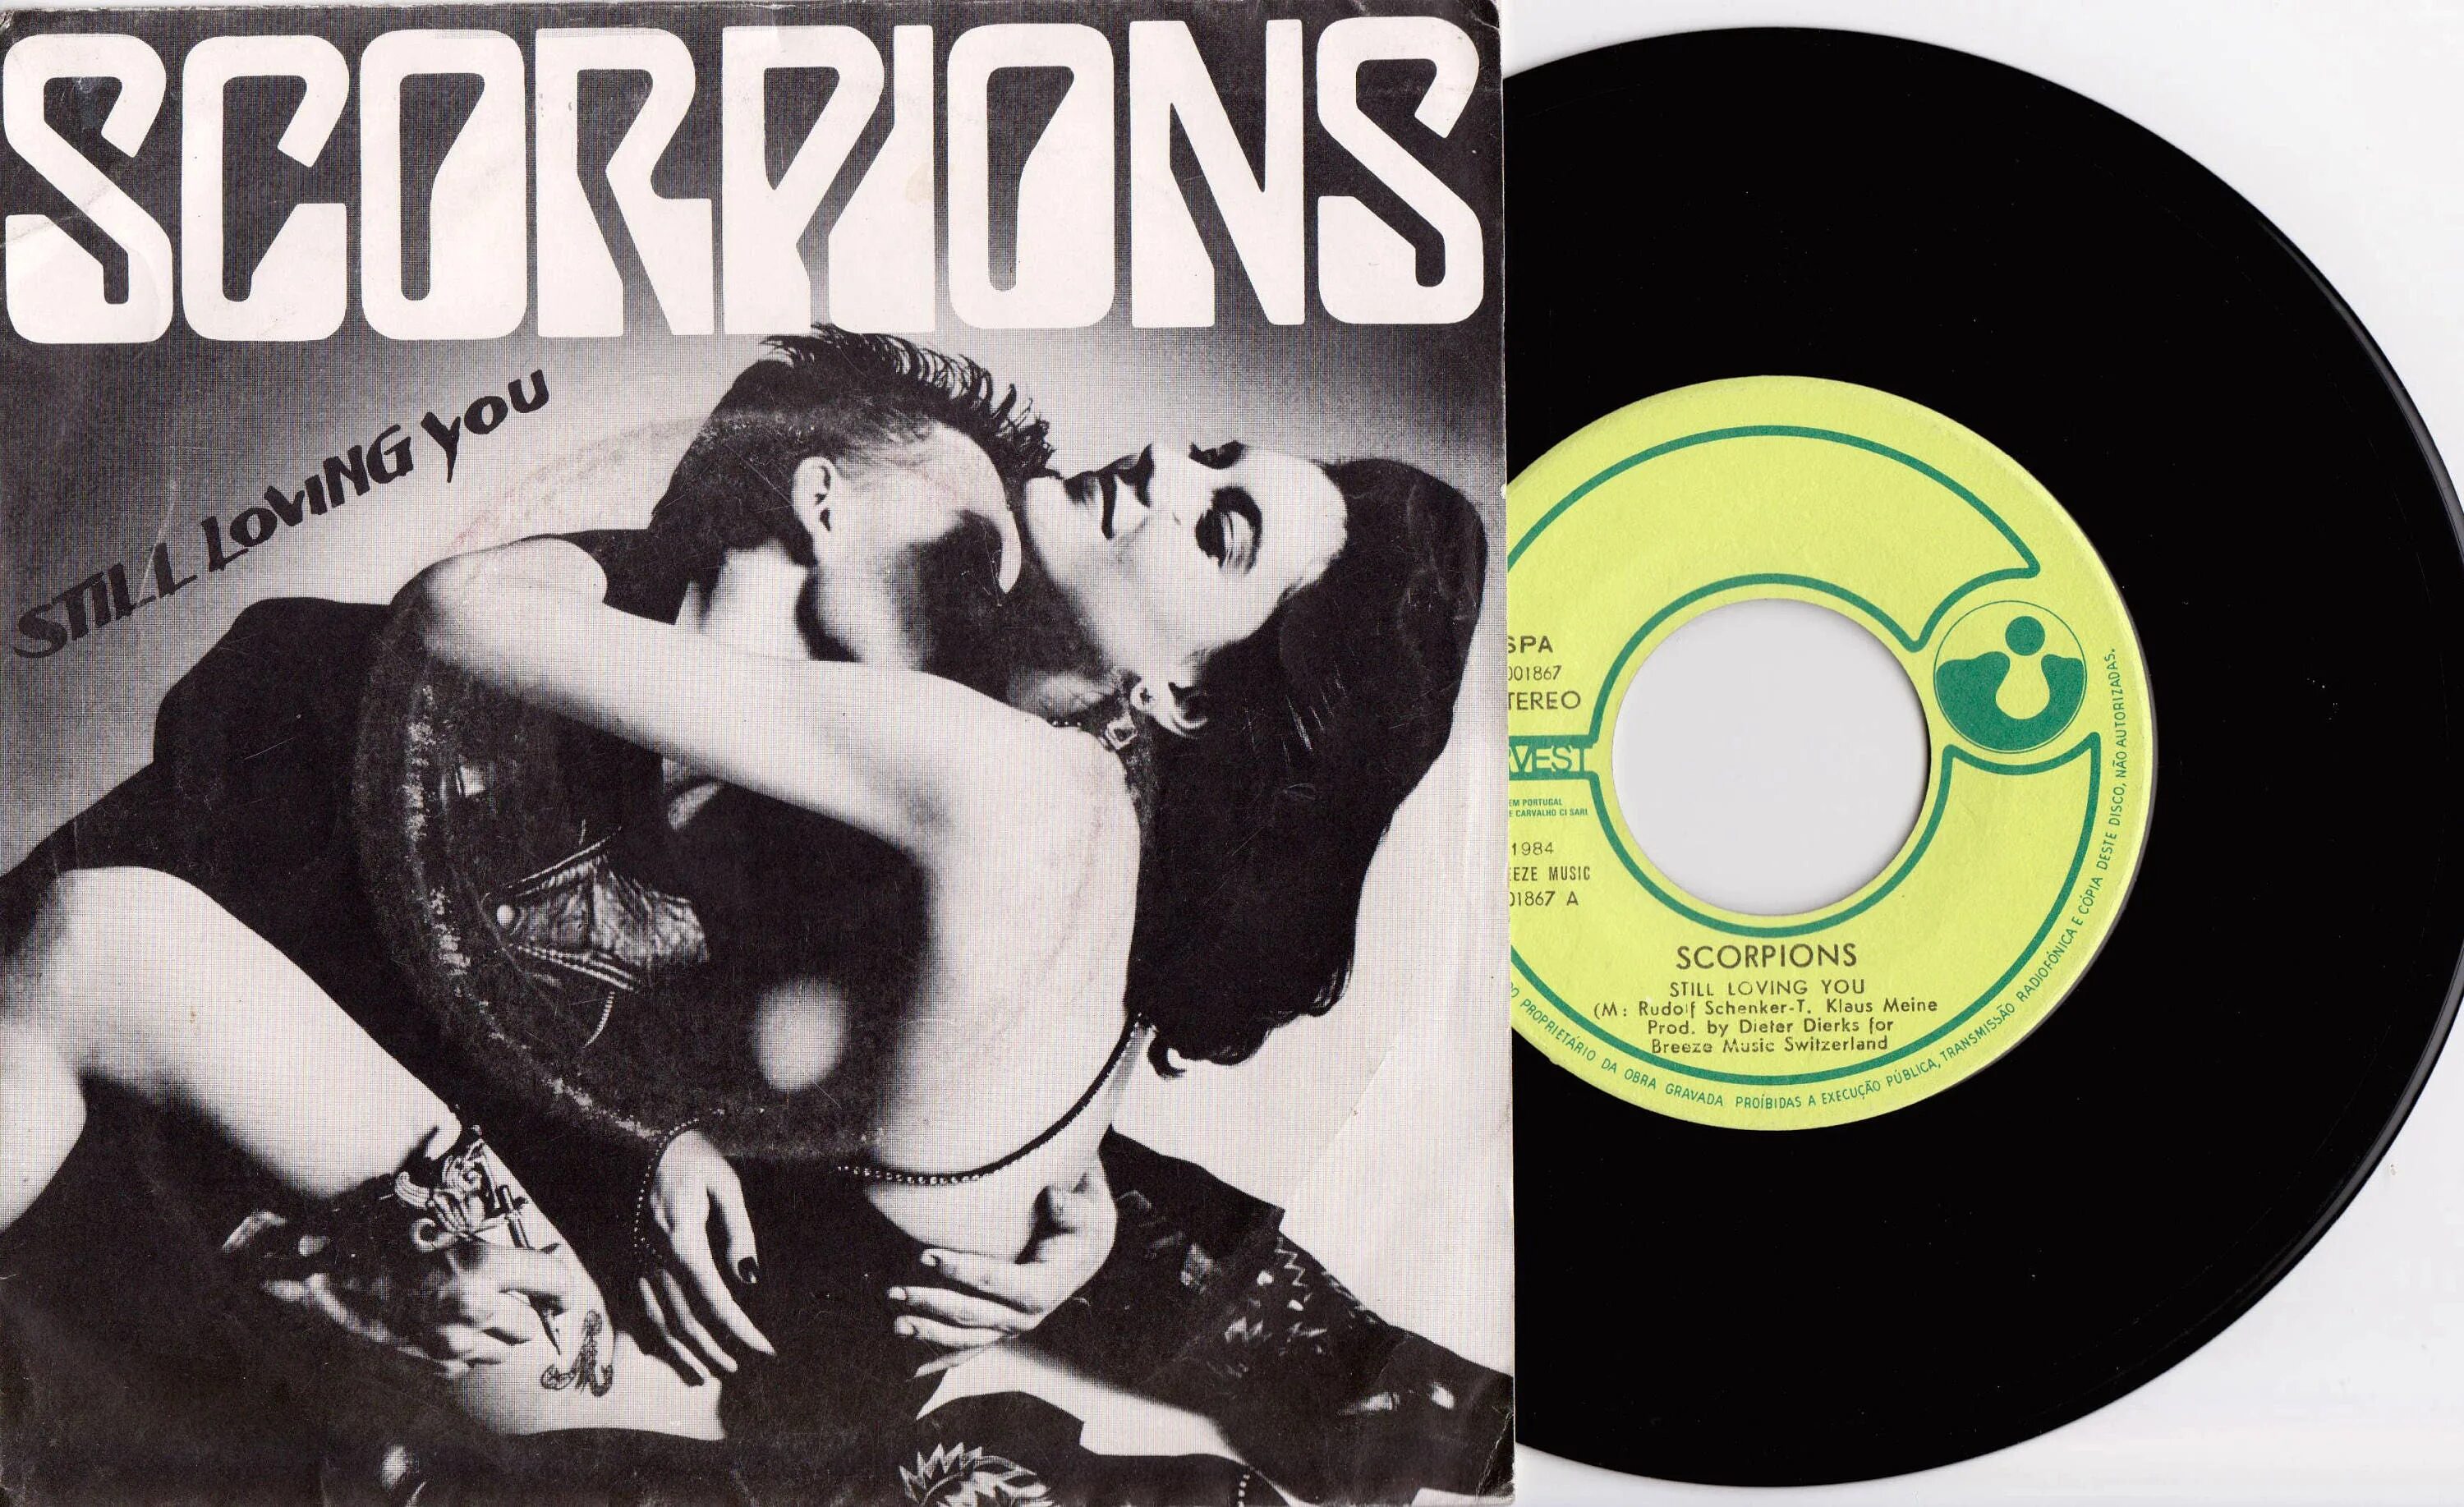 Скорпионс винил 1984. Скорпионс стил. Scorpions still loving you 1984. Scorpions 1984 Love at first Sting LP.